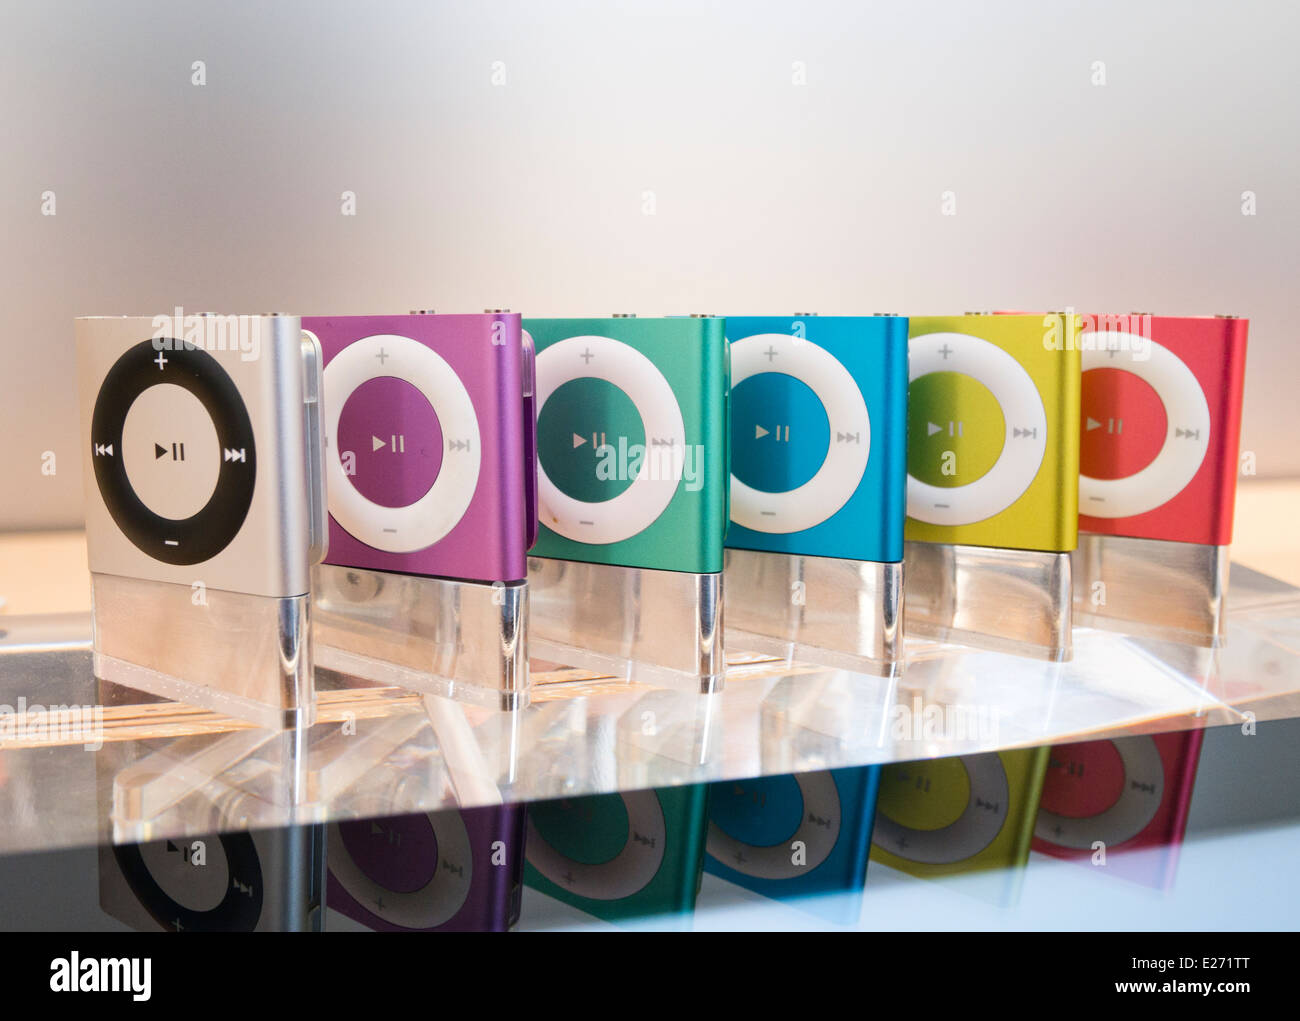 Apple ipod shuffle -Fotos und -Bildmaterial in hoher Auflösung – Alamy